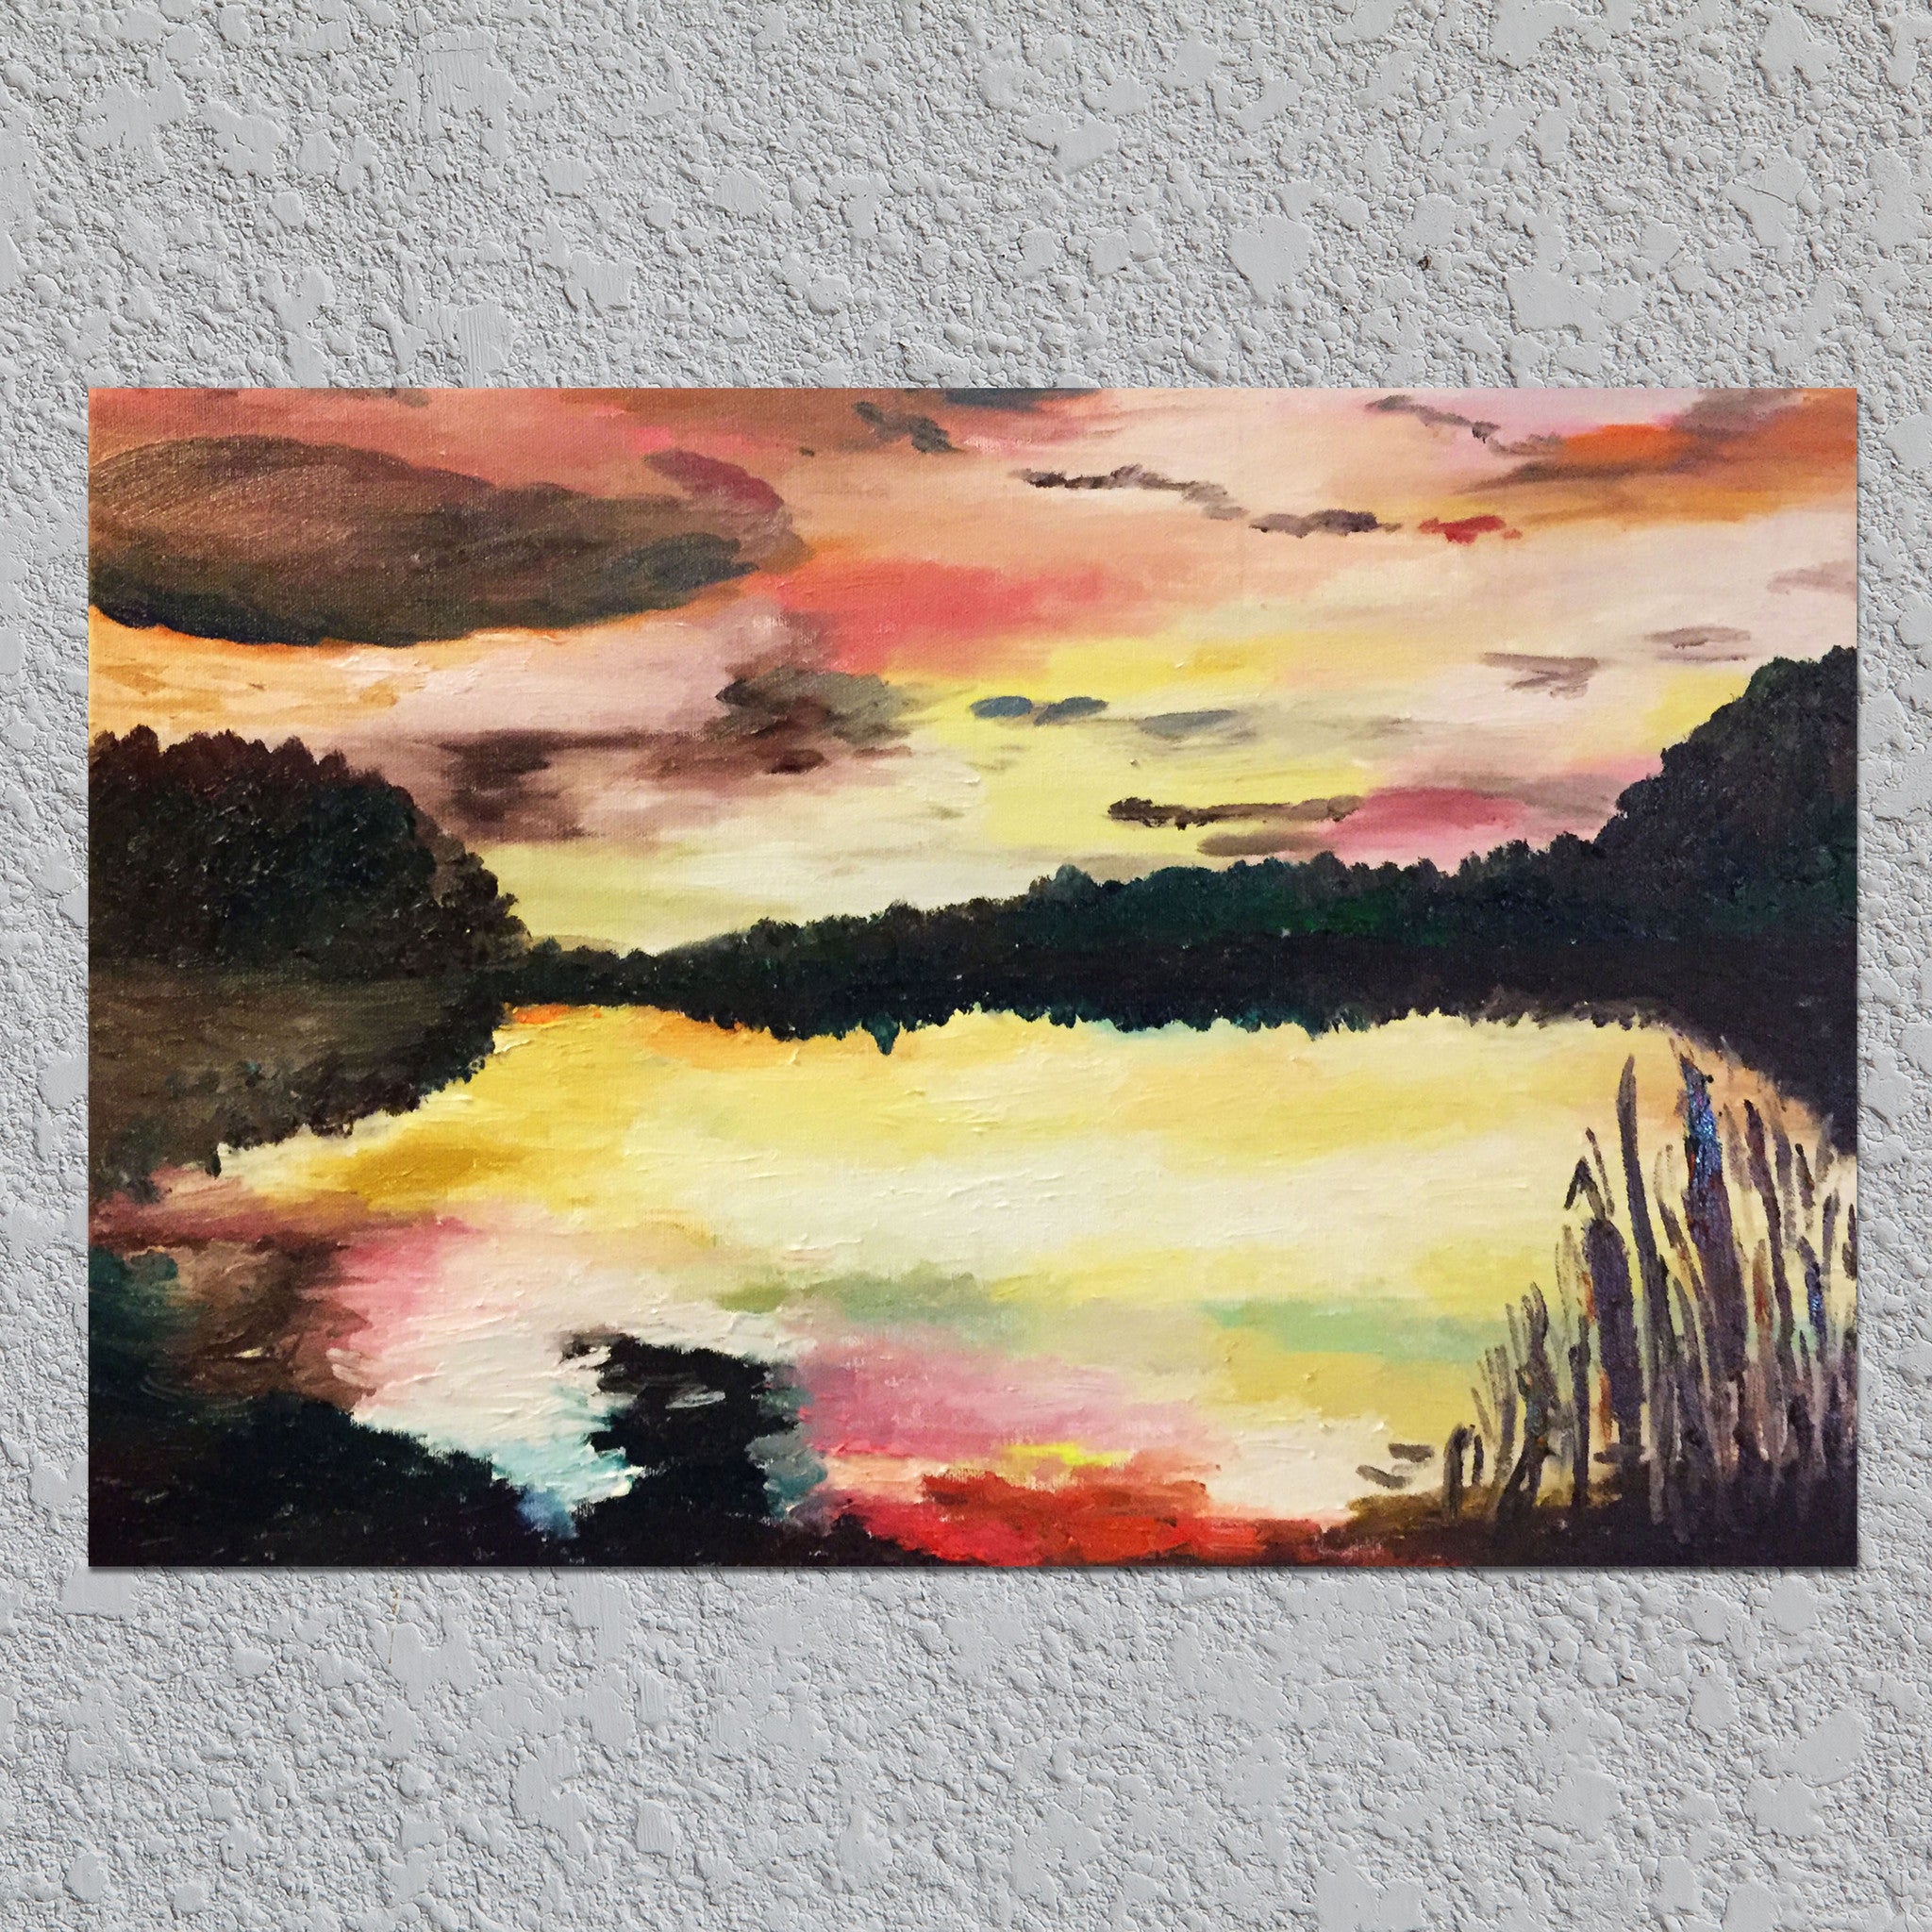 Sunset on the Lake by KJ Ehr